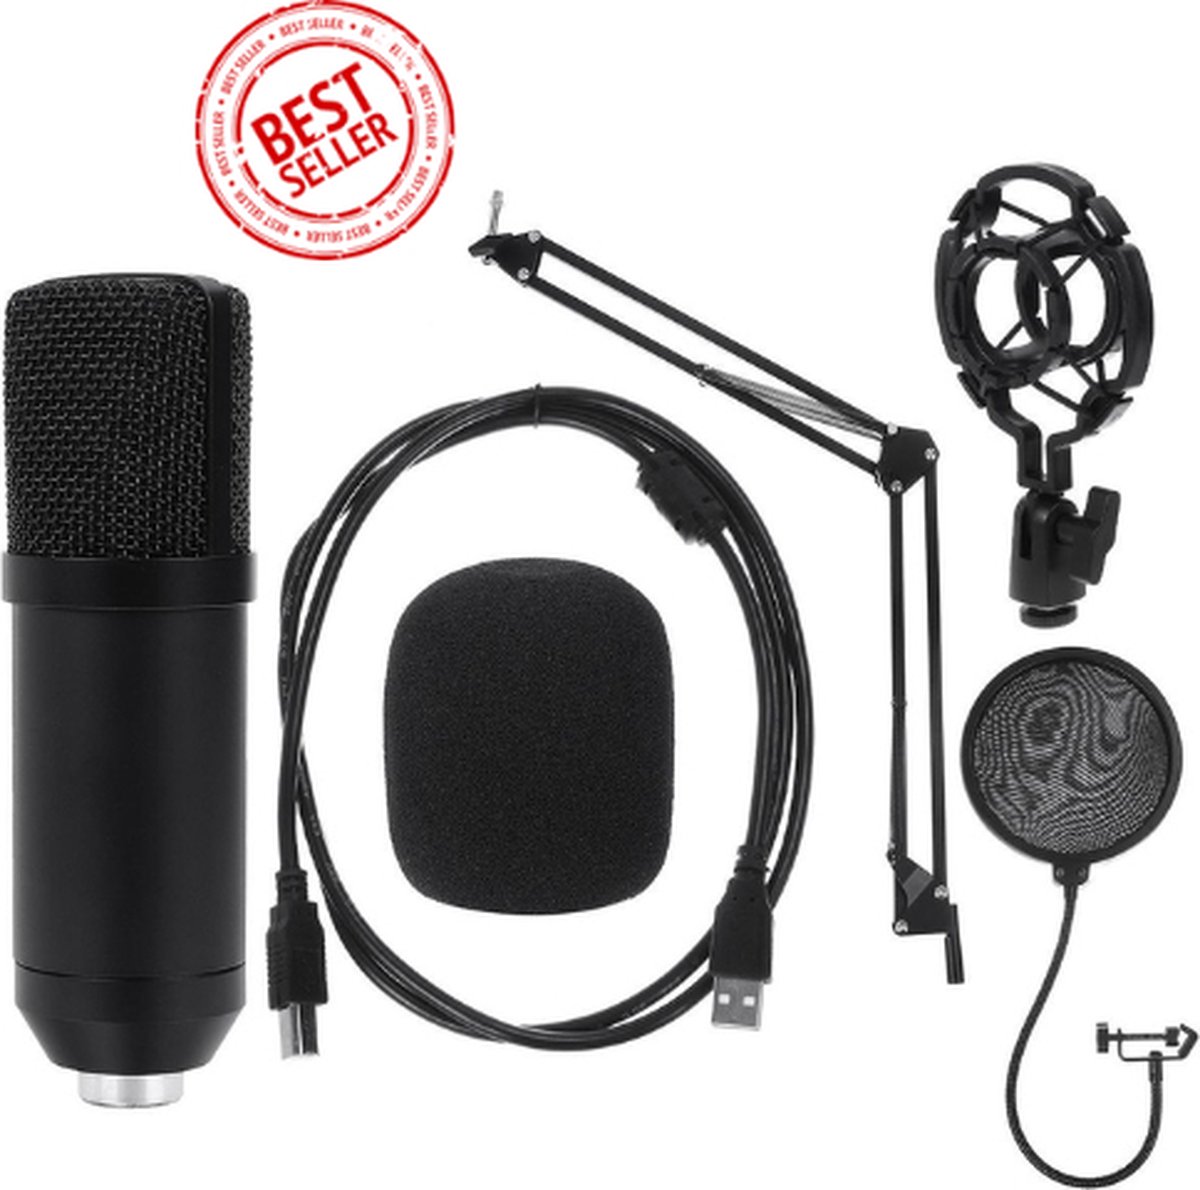 Microfoon Arm - Incl. Microfoon - Microfoon Statief - Standaard - Popfilter - Pc - Laptop - Studio - Opname - Zwart